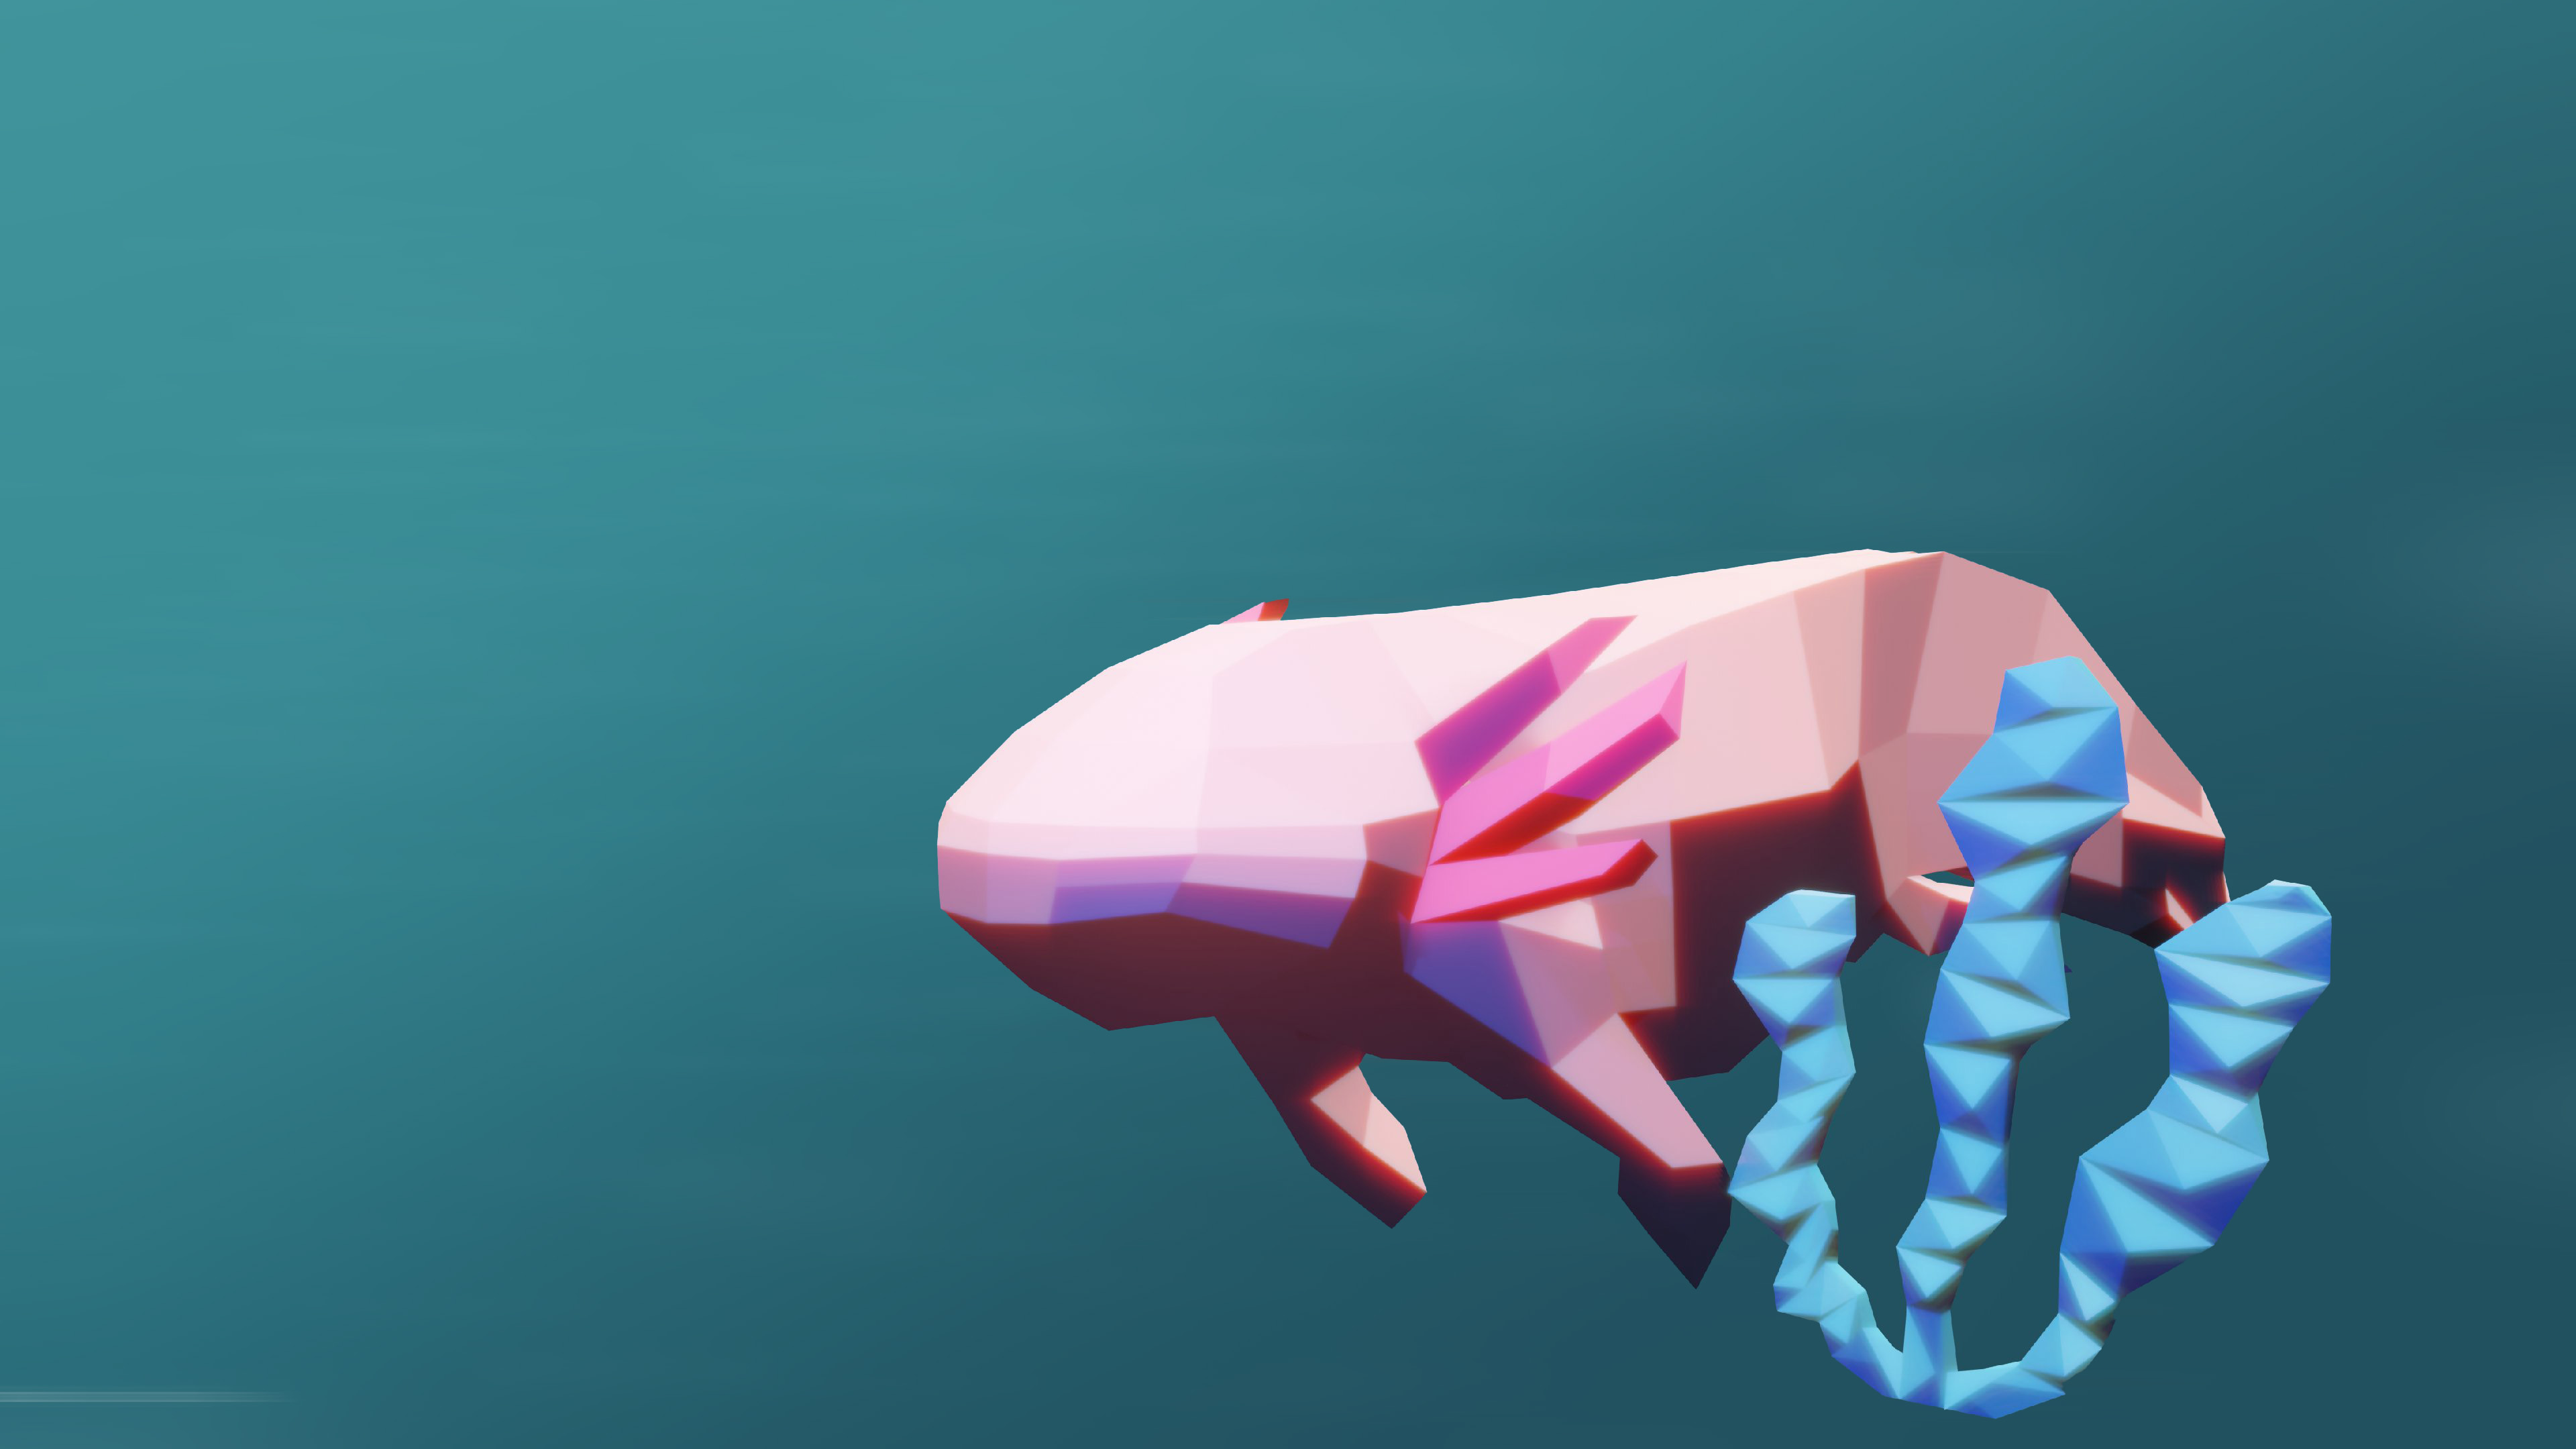 A low poly version of an animal - Axolotl